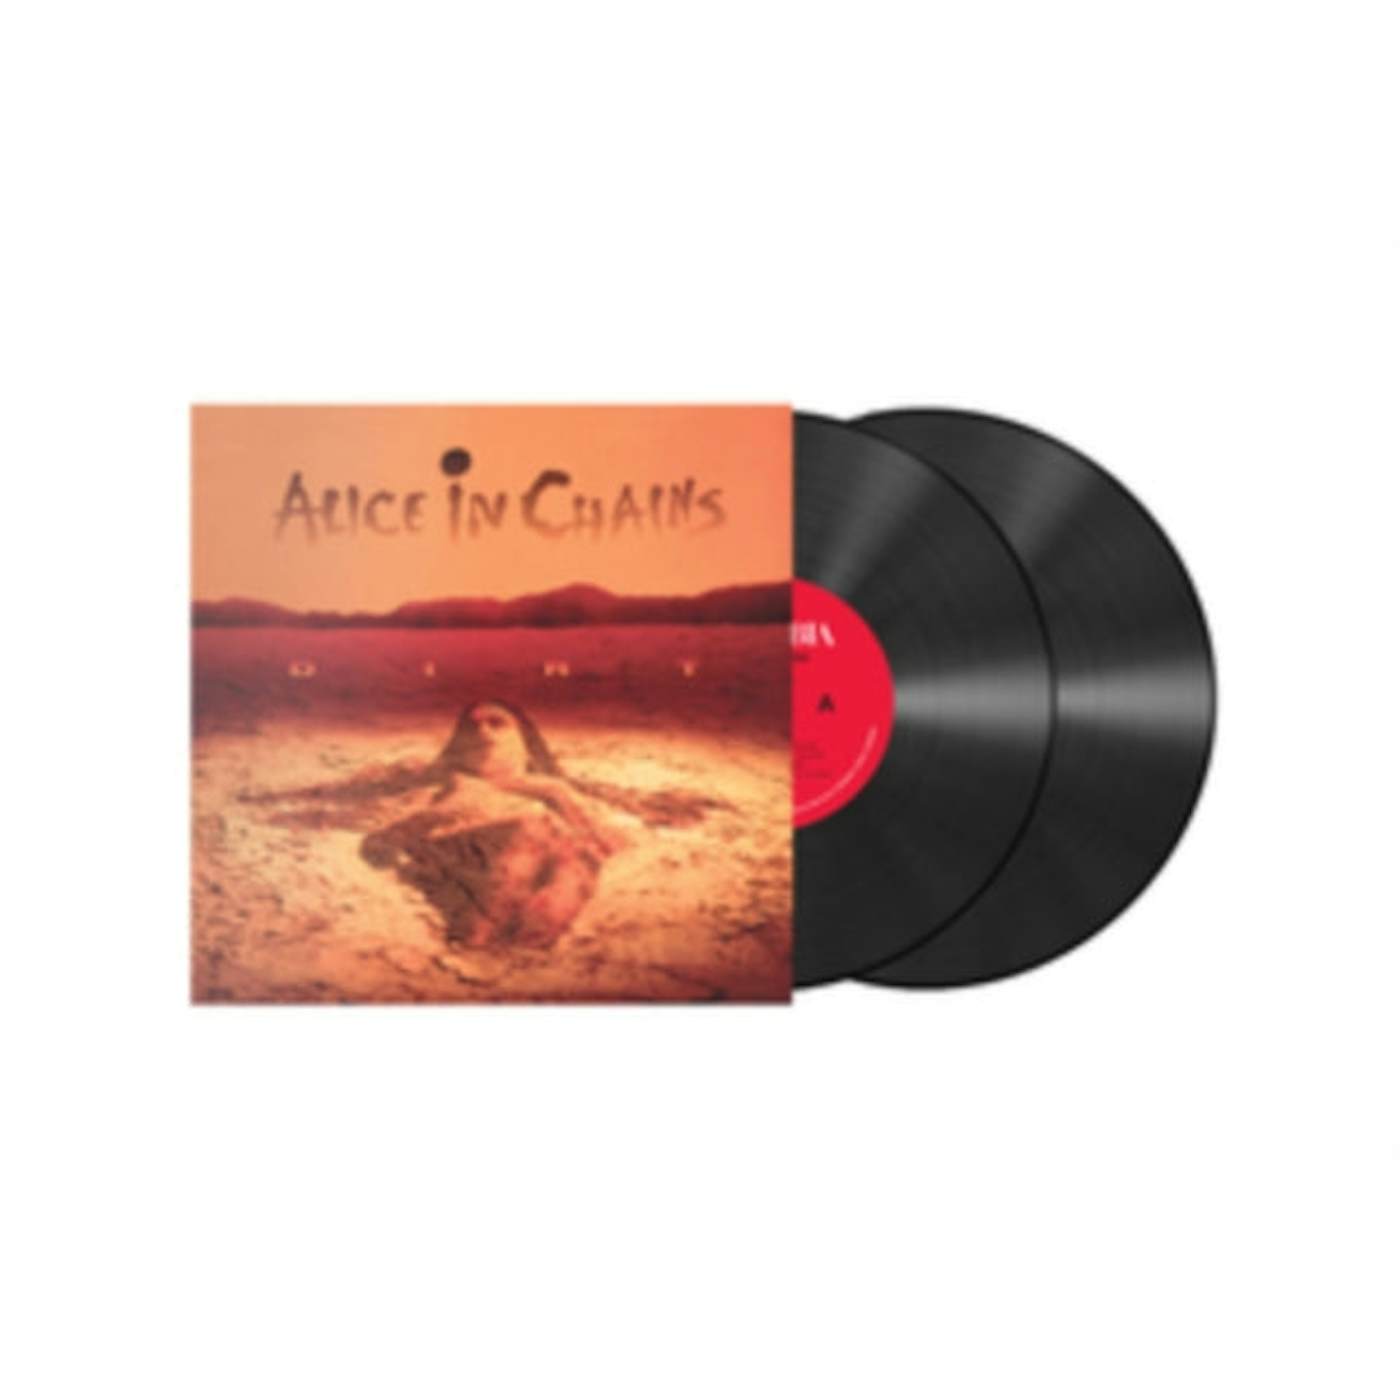 Alice In Chains LP Vinyl Record  Dirt